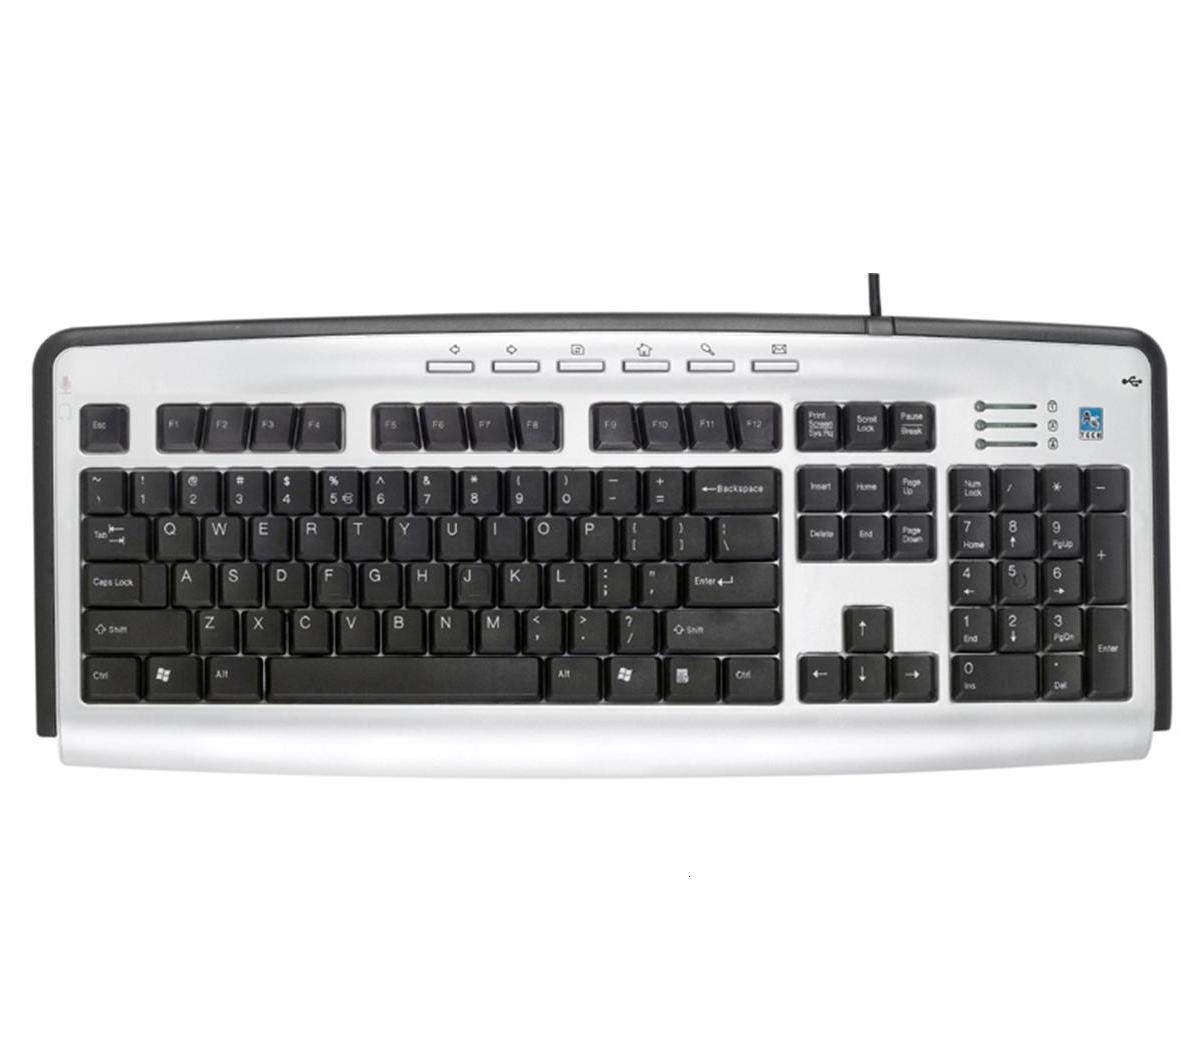 كيبورد - Keyboard ايفورتك-A4Tech  KL(S)-23MU - Headset X-Slim